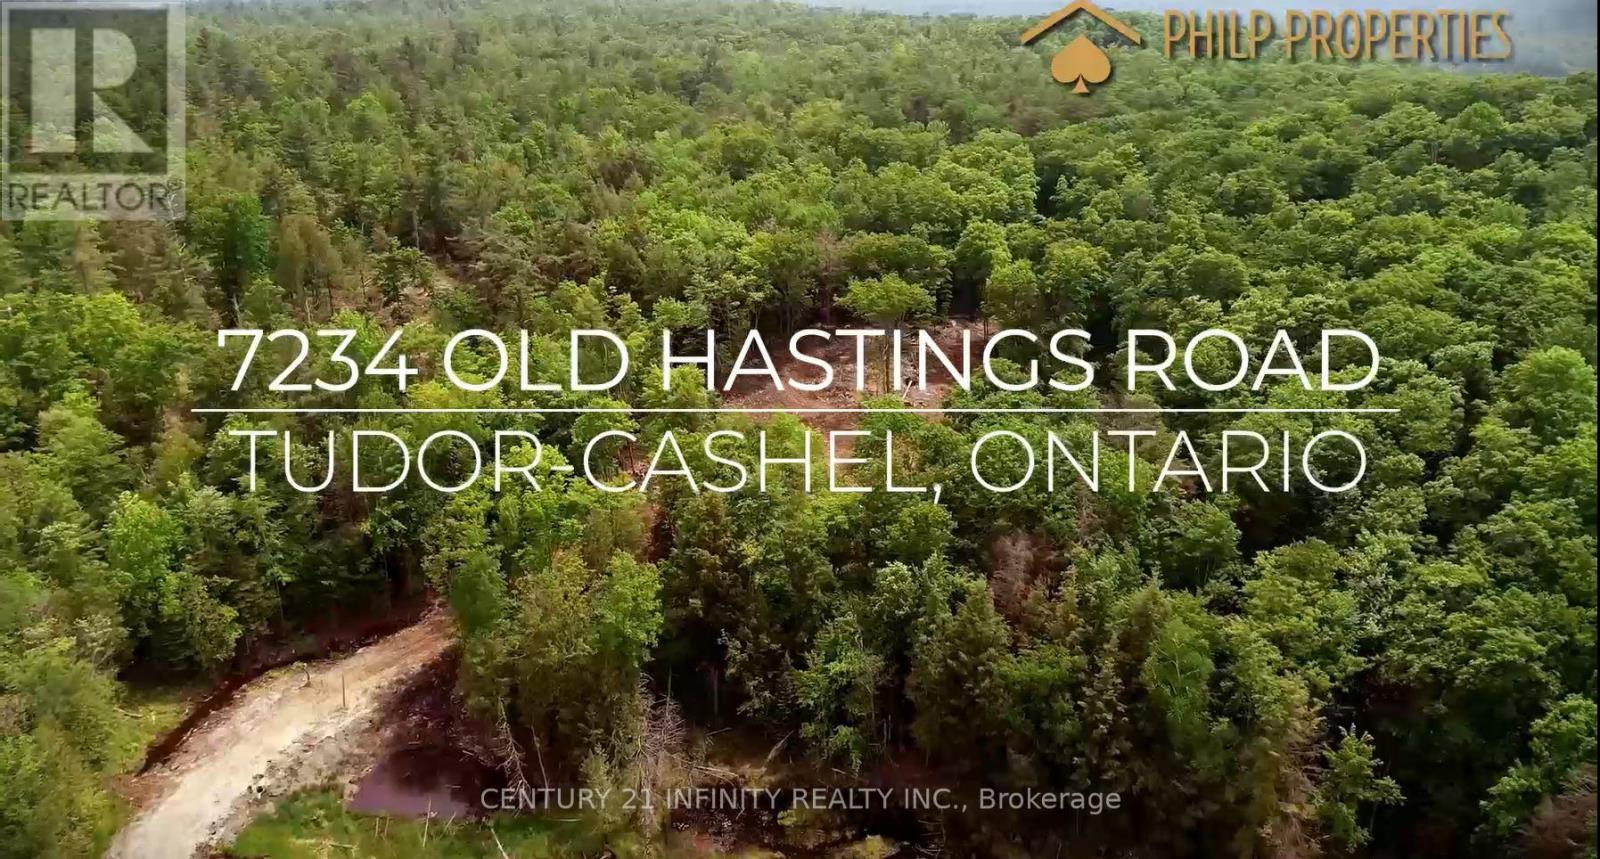 7234 OLD HASTINGS LOT 50 ROAD, tudor & cashel, Ontario